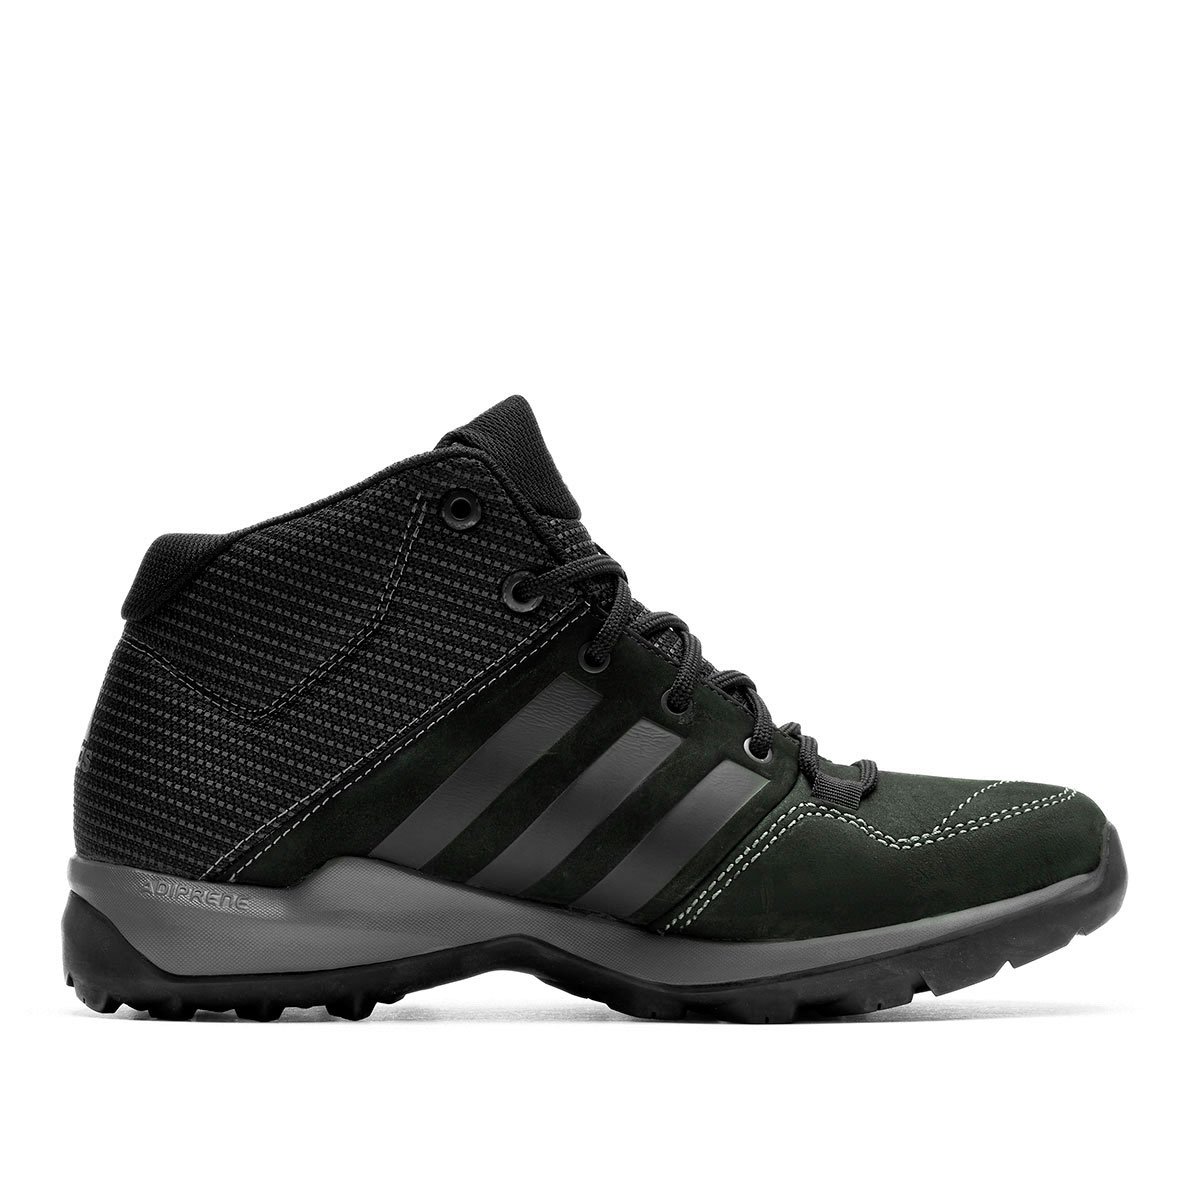 ophouden Groenten straf adidas Daroga Plus Mid Leather B27276 Мъжки спортни обувки - ShopSector.com